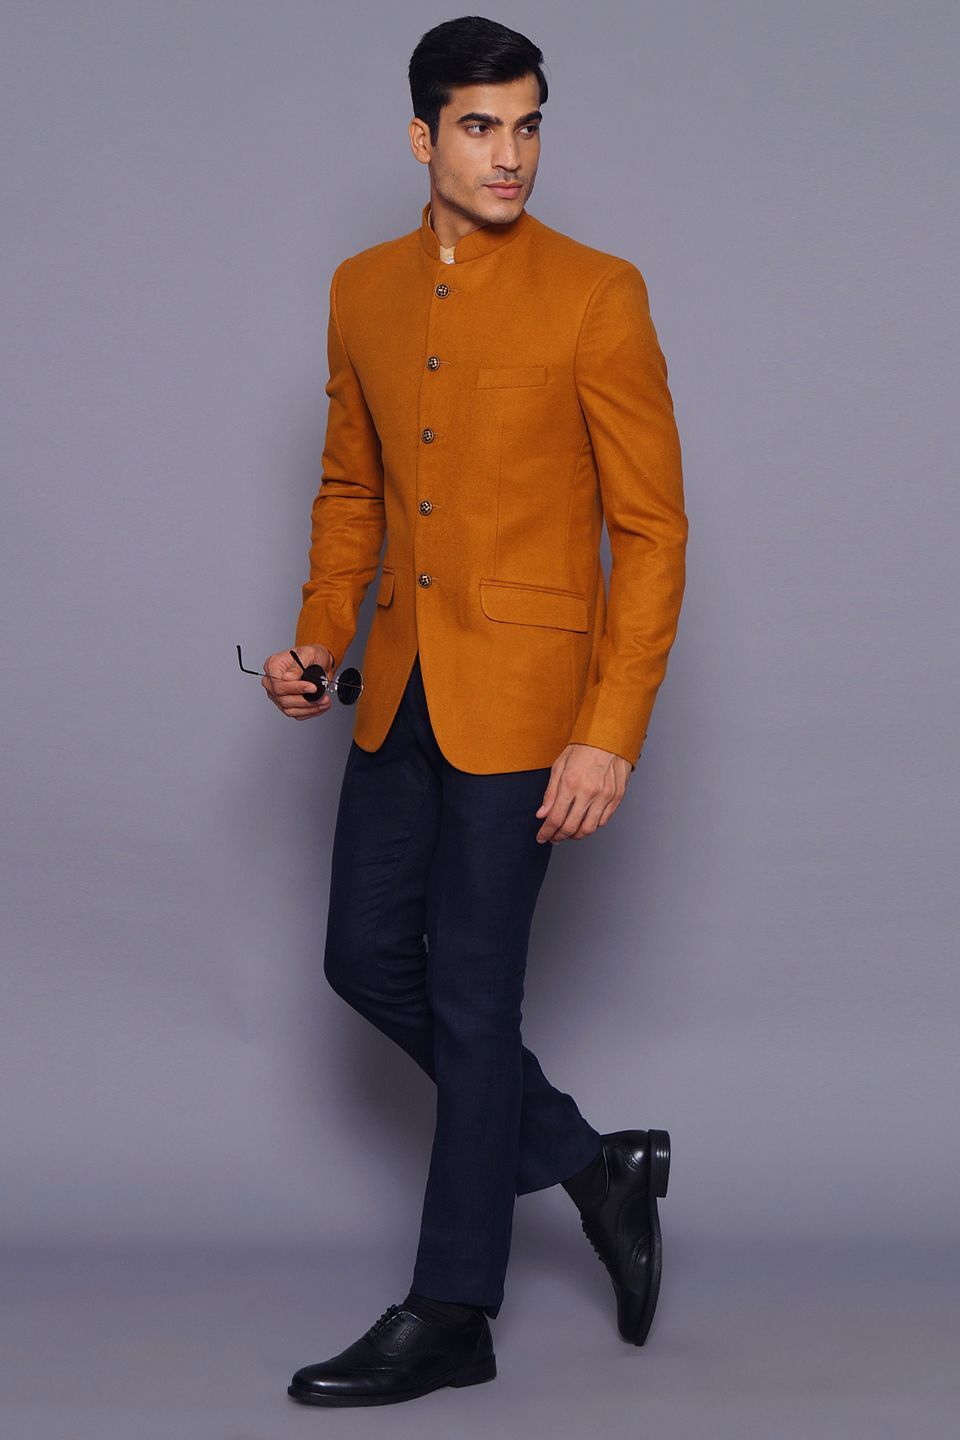 Wintage Men's Wool Casual and Festive Bandhgala Blazer : Orange